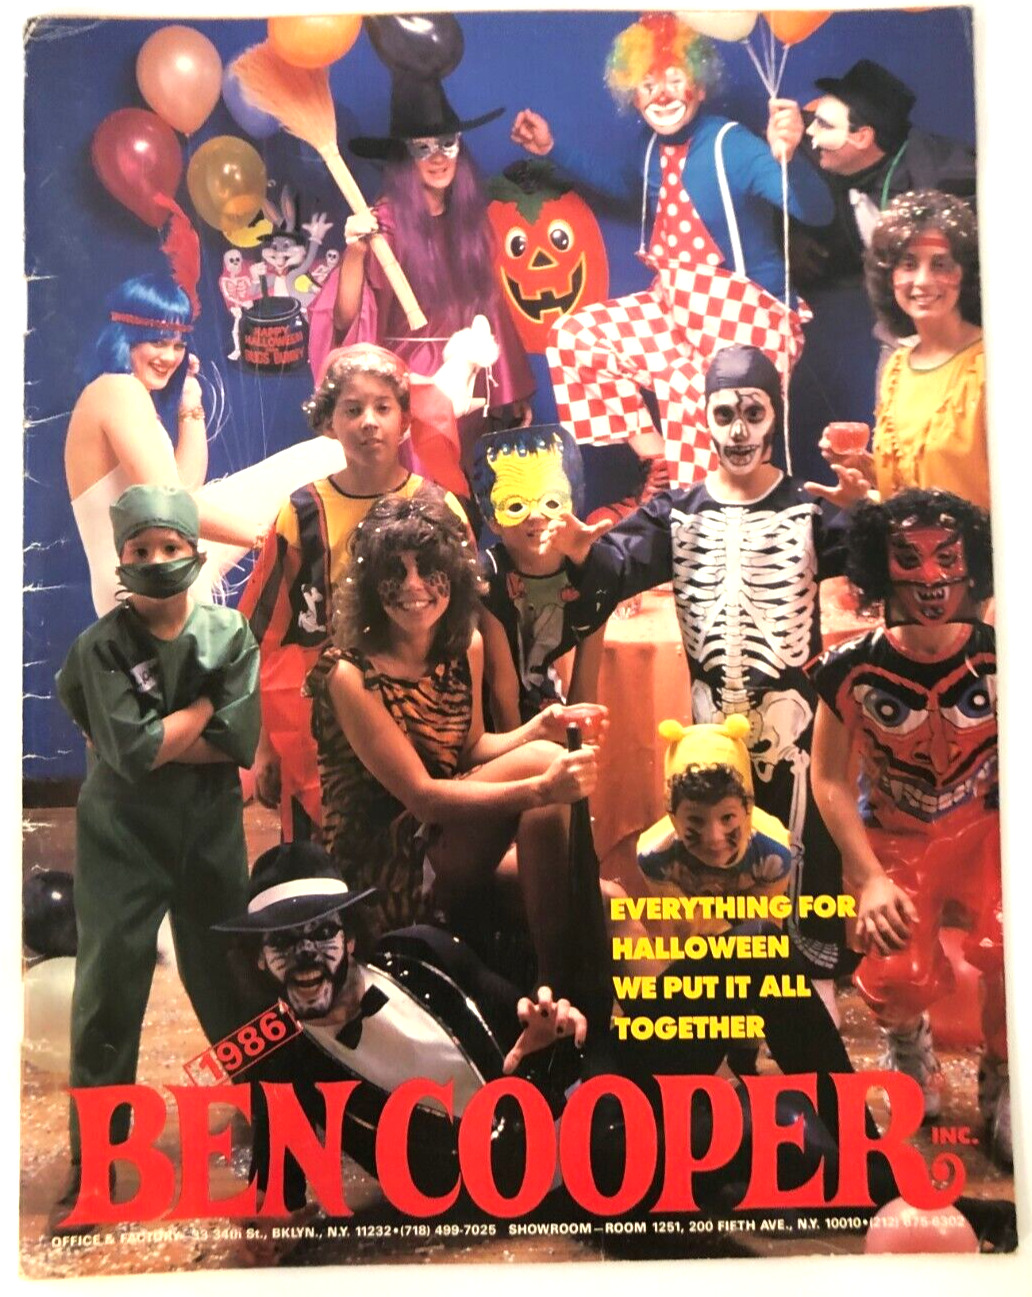 Rare 1986 BEN COOPER INC. Halloween Catalogue - full color